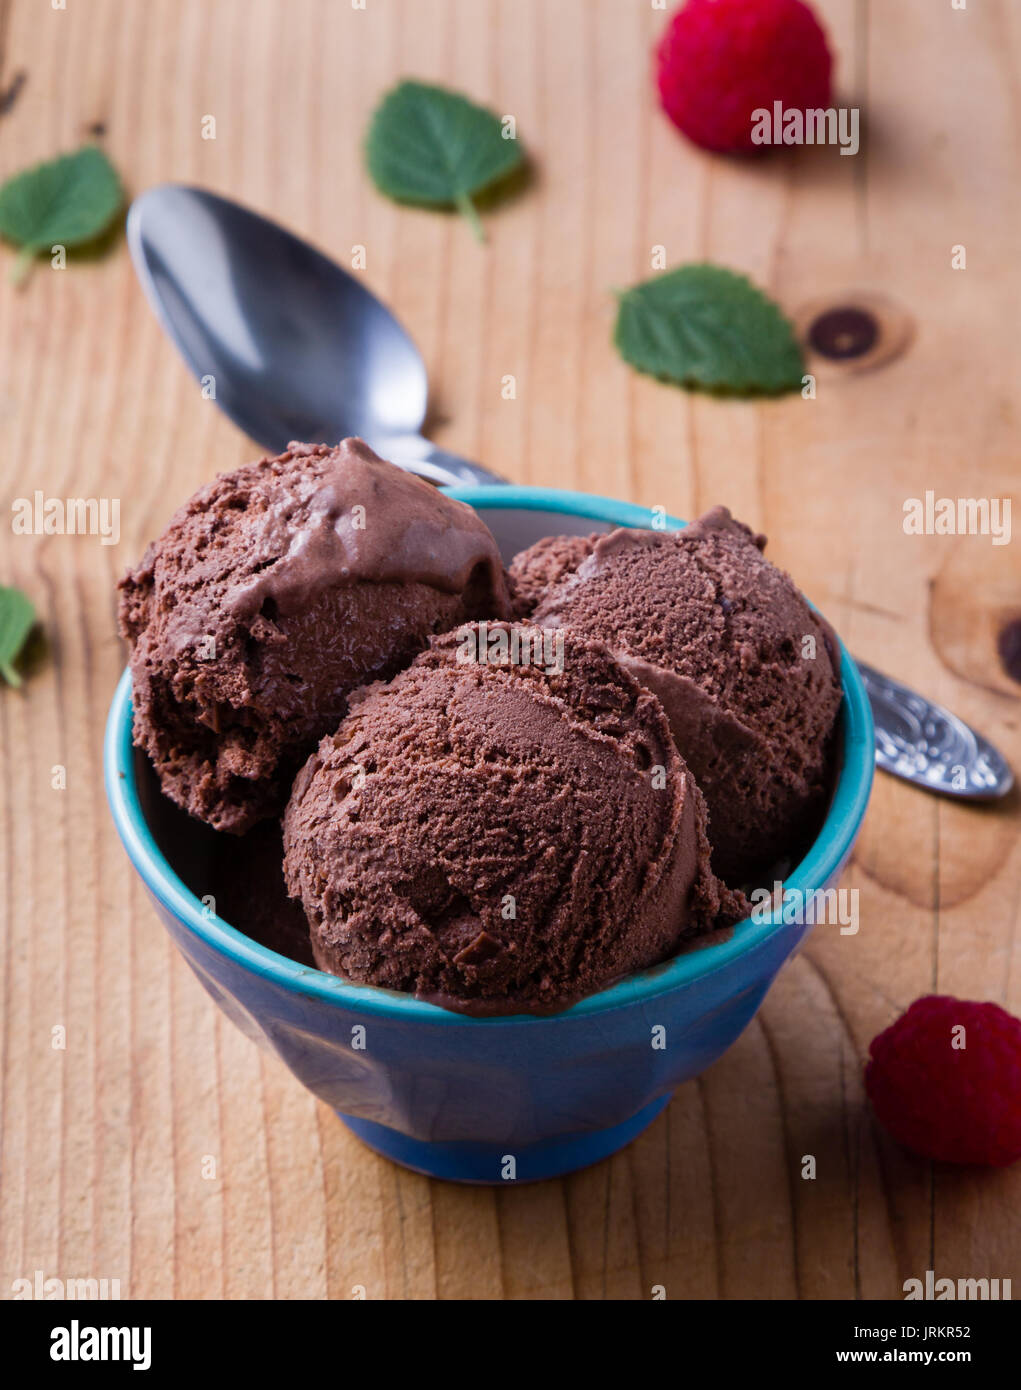 chocolate ice cream in blue bowl with raspberries Stock Photo